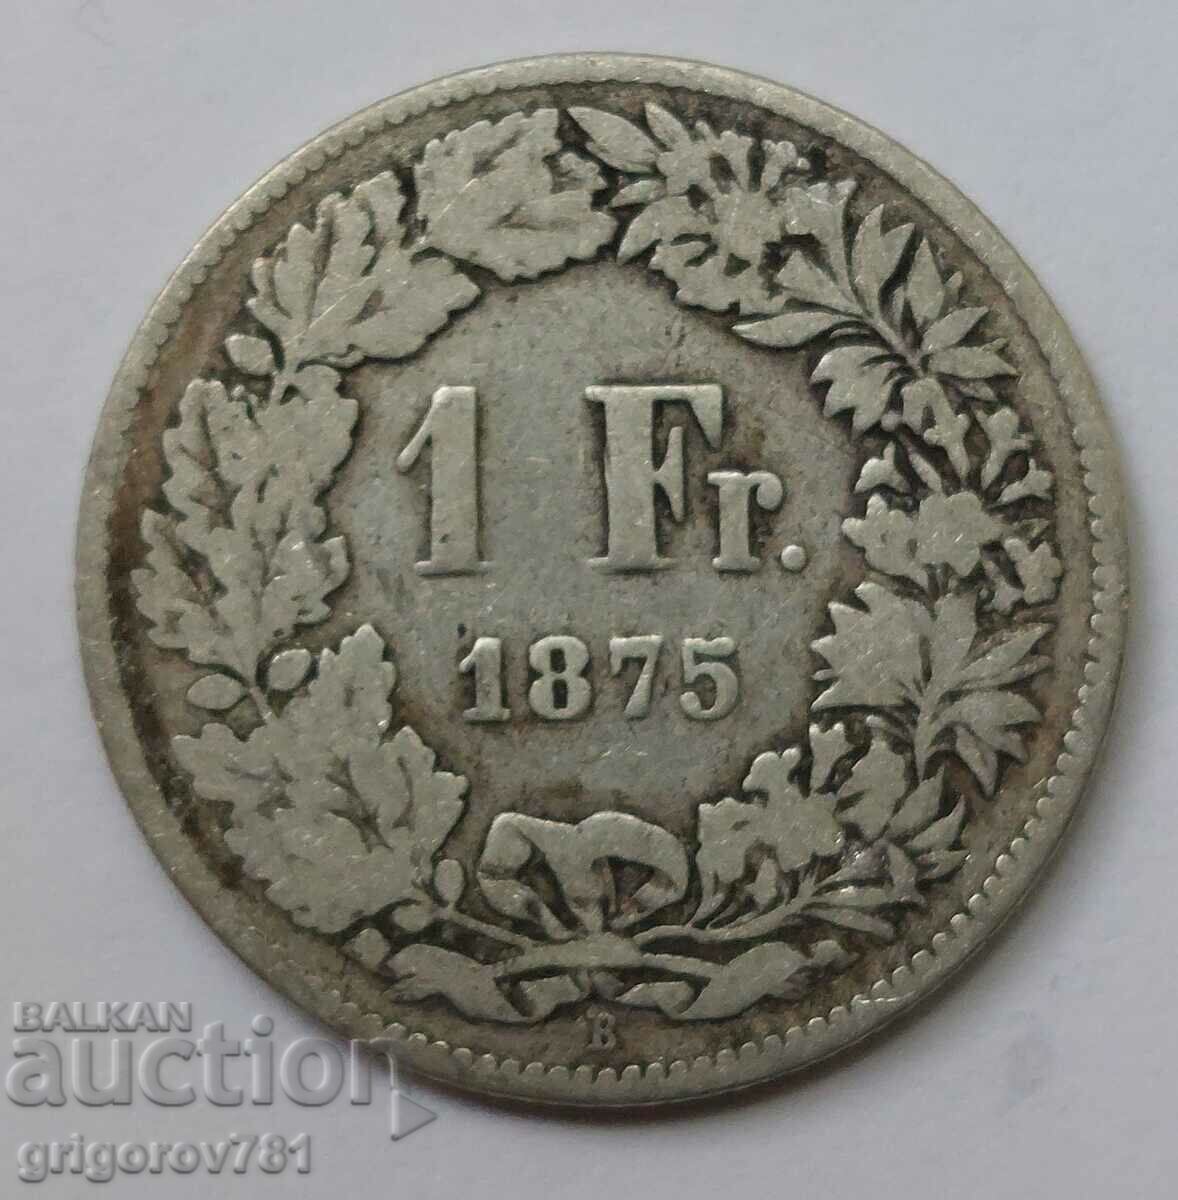 1 Franc Silver Switzerland 1875 B - Silver Coin #2